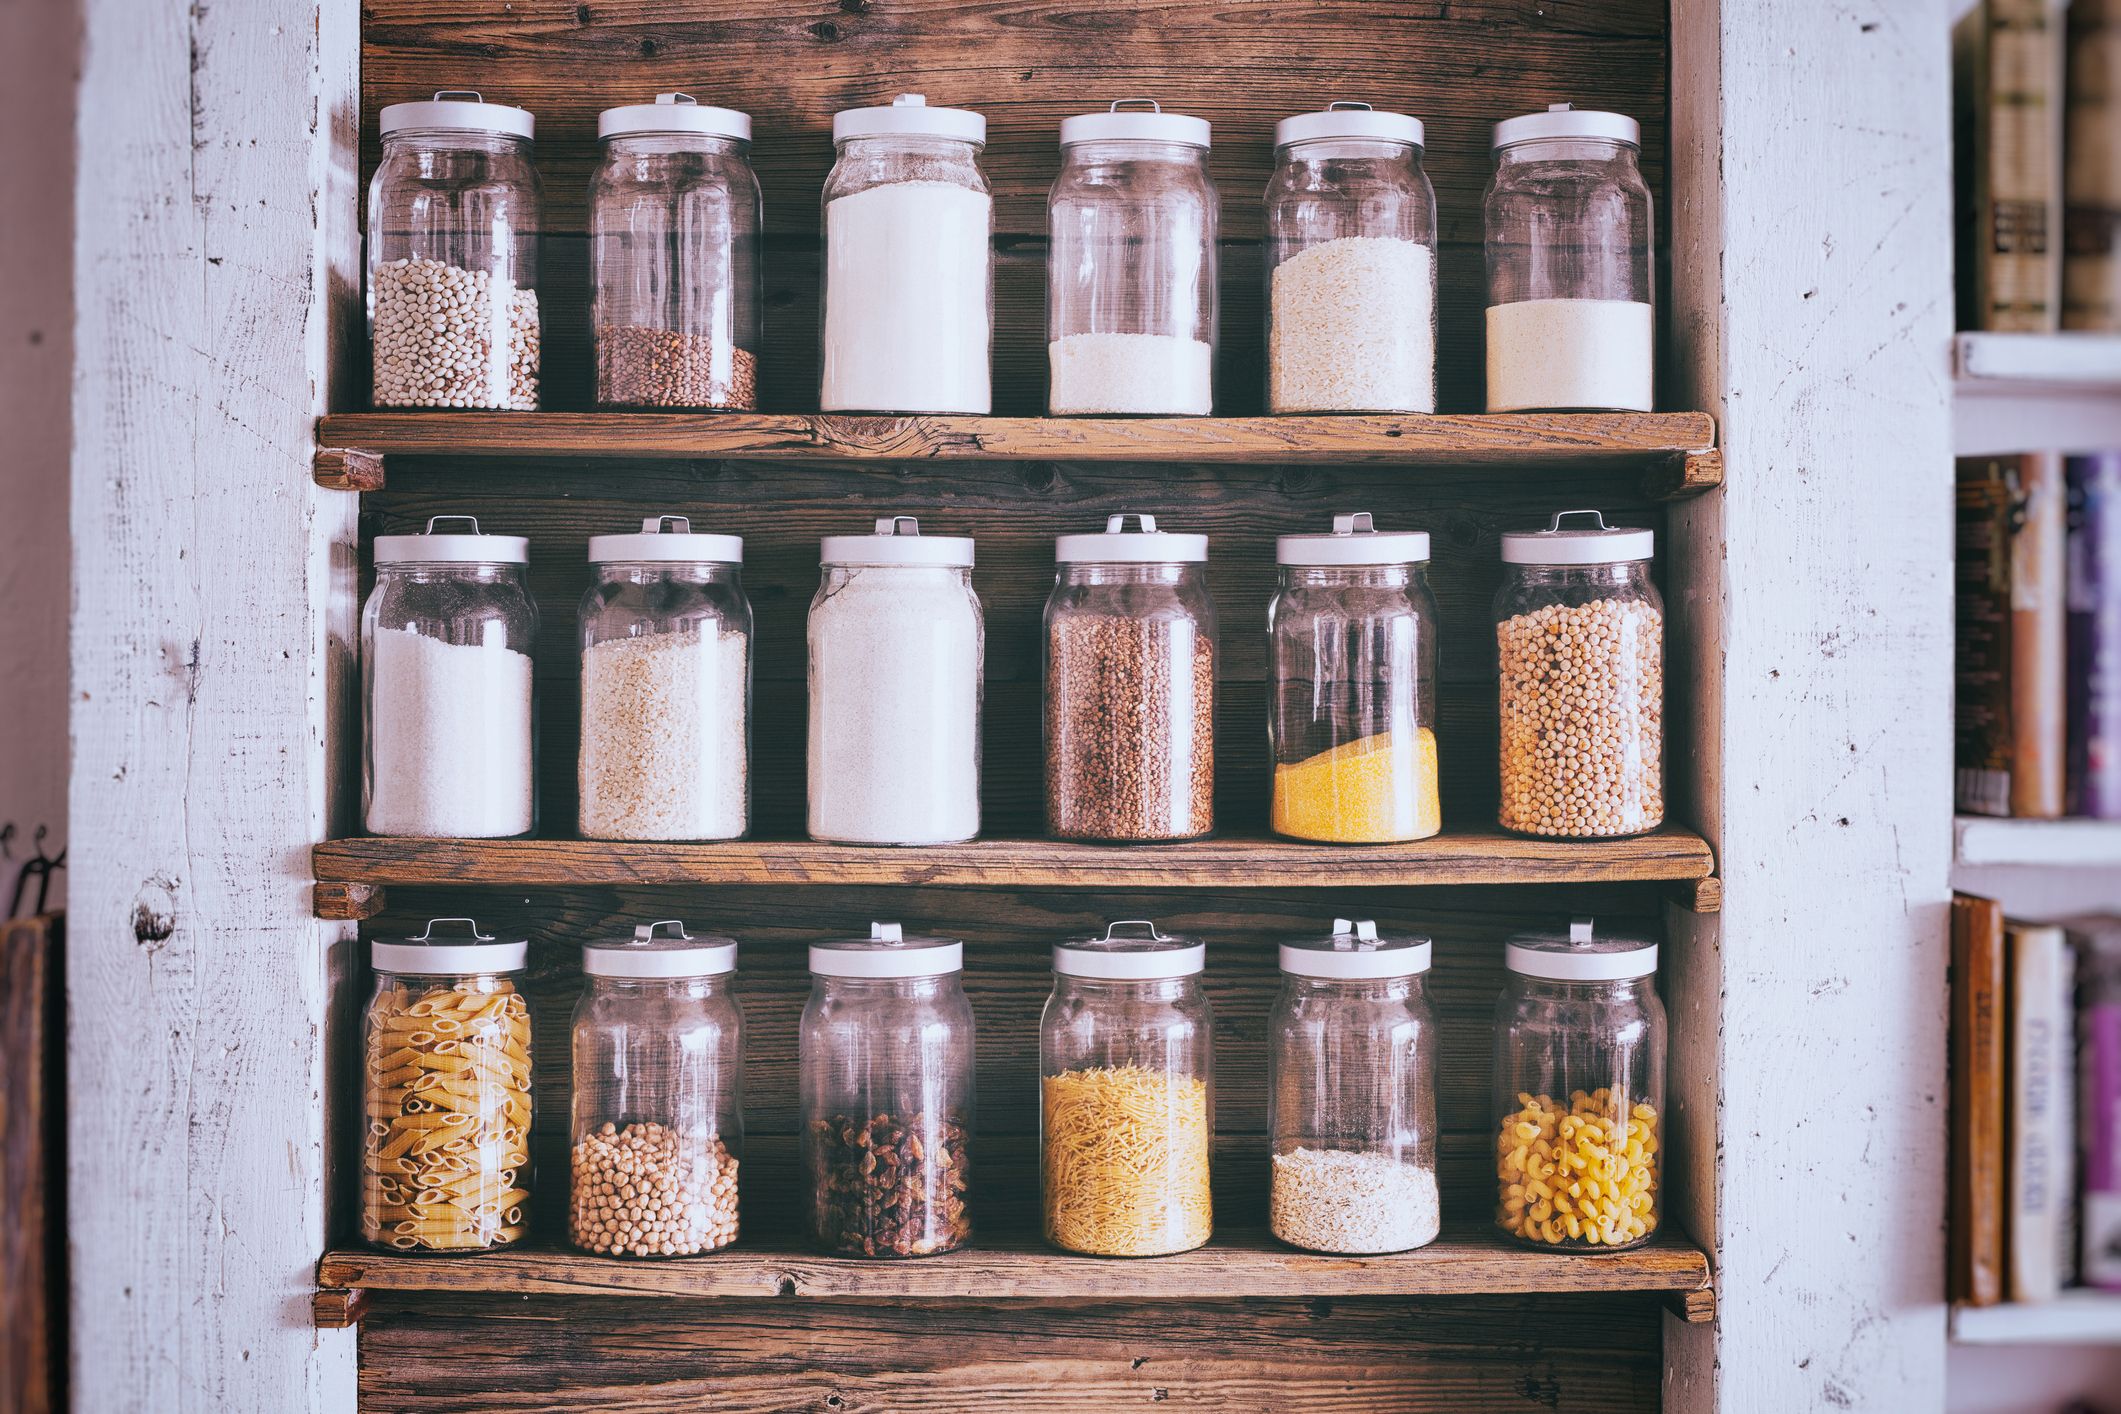 20 Genius Kitchen Pantry Organization Ideas - How to Organize Your Pantry 